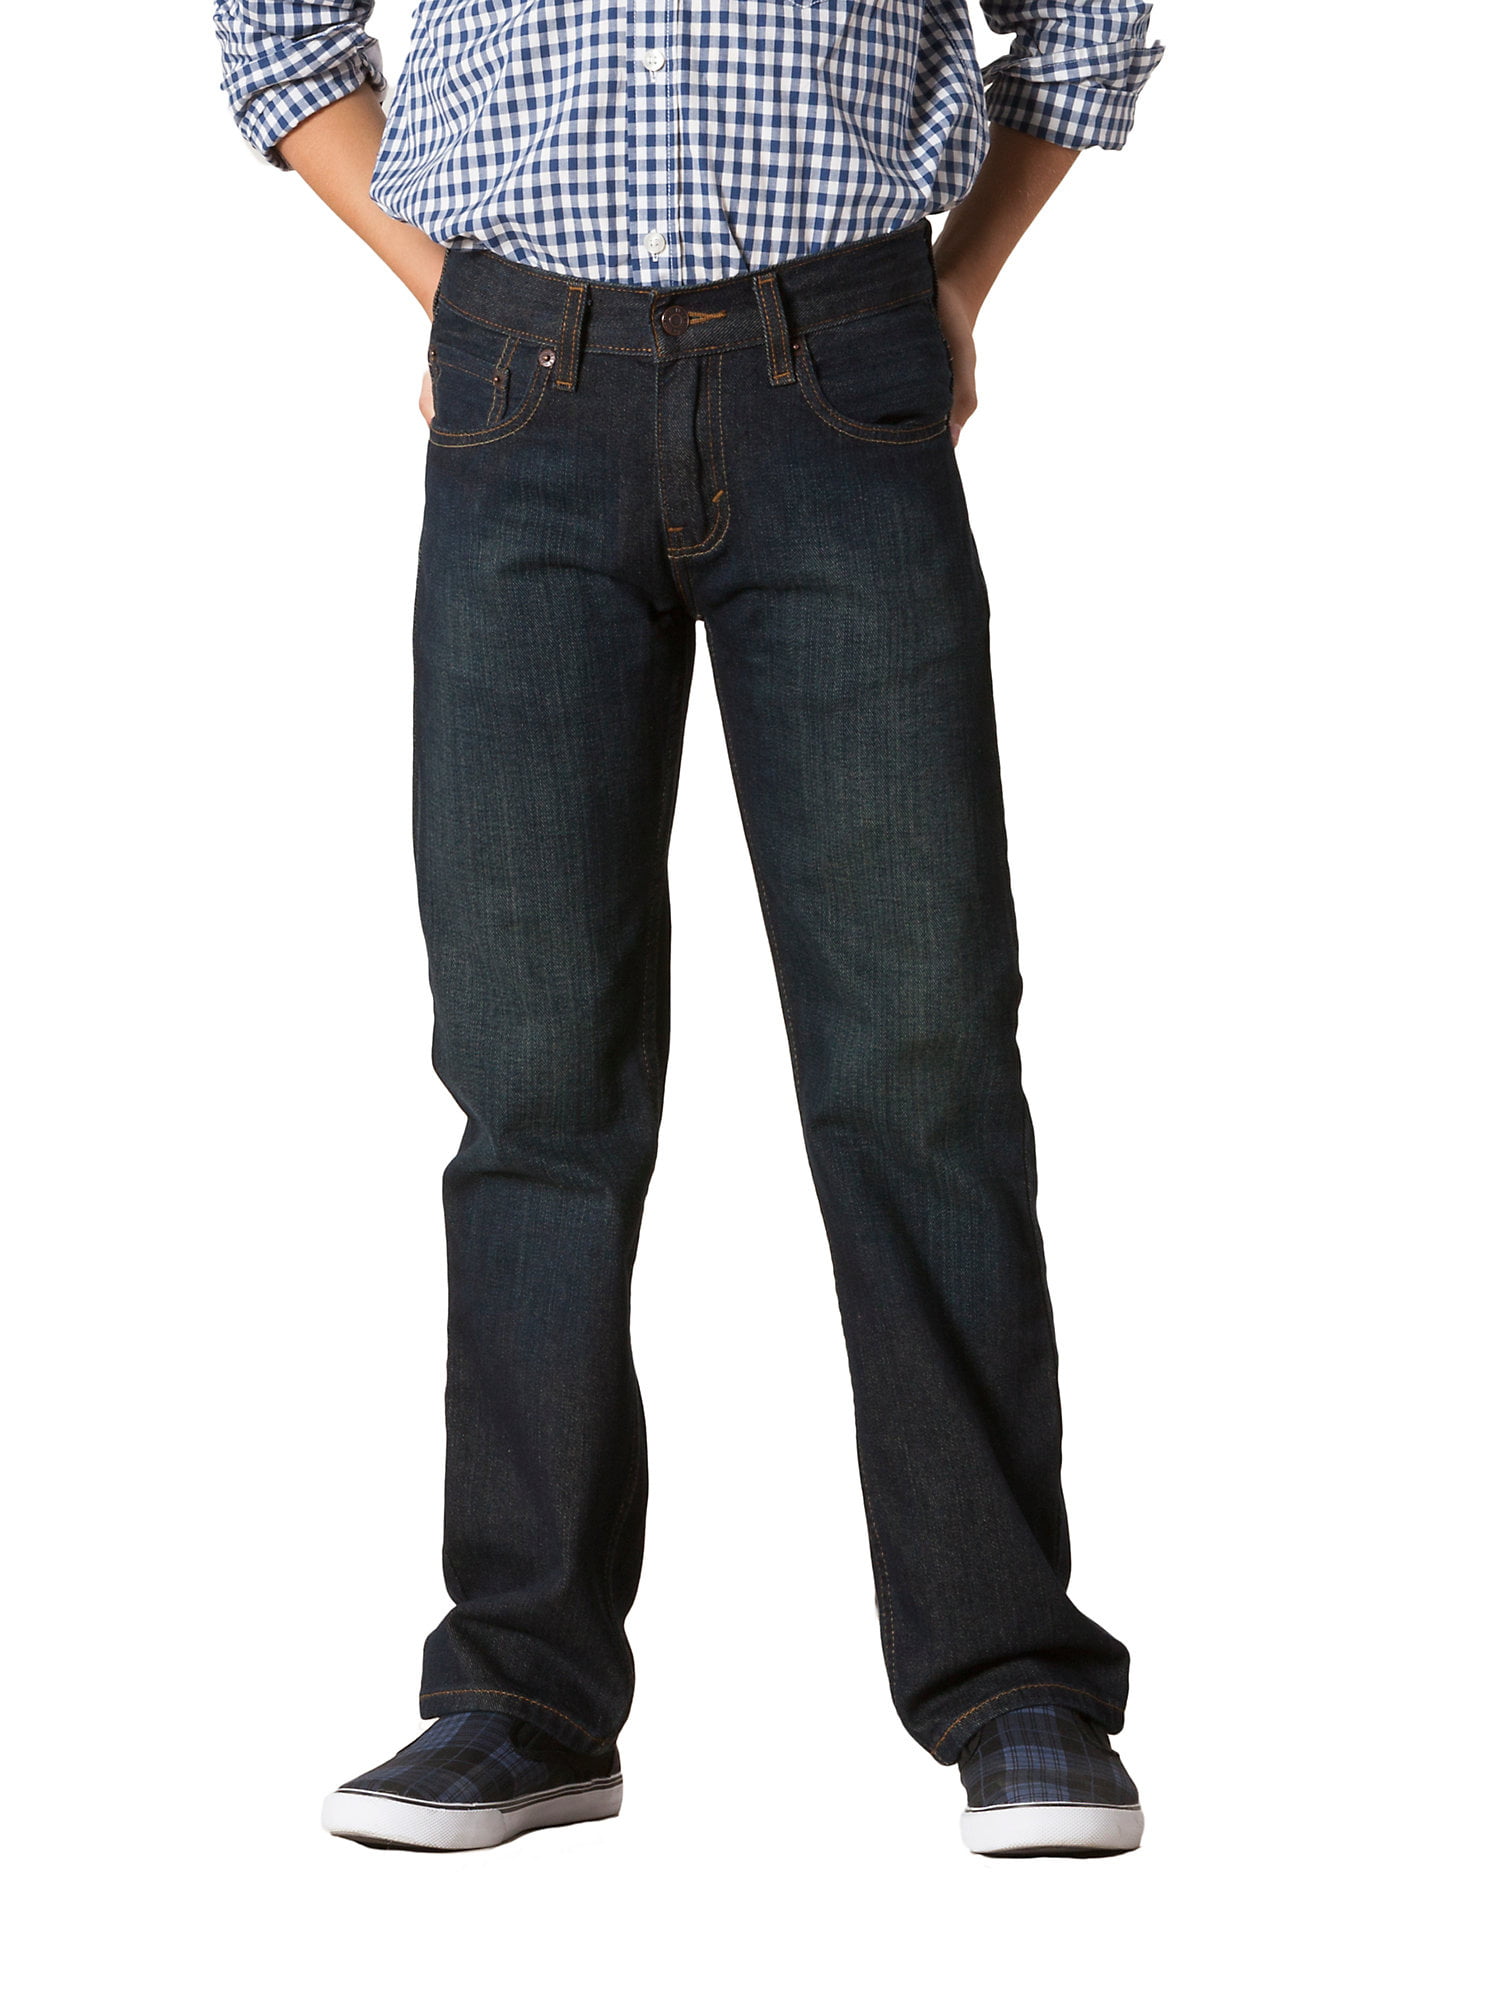 Signature by Levi Strauss & Co. Bootcut Fit Jeans (Little Boys & Big Boys)  - Walmart.com